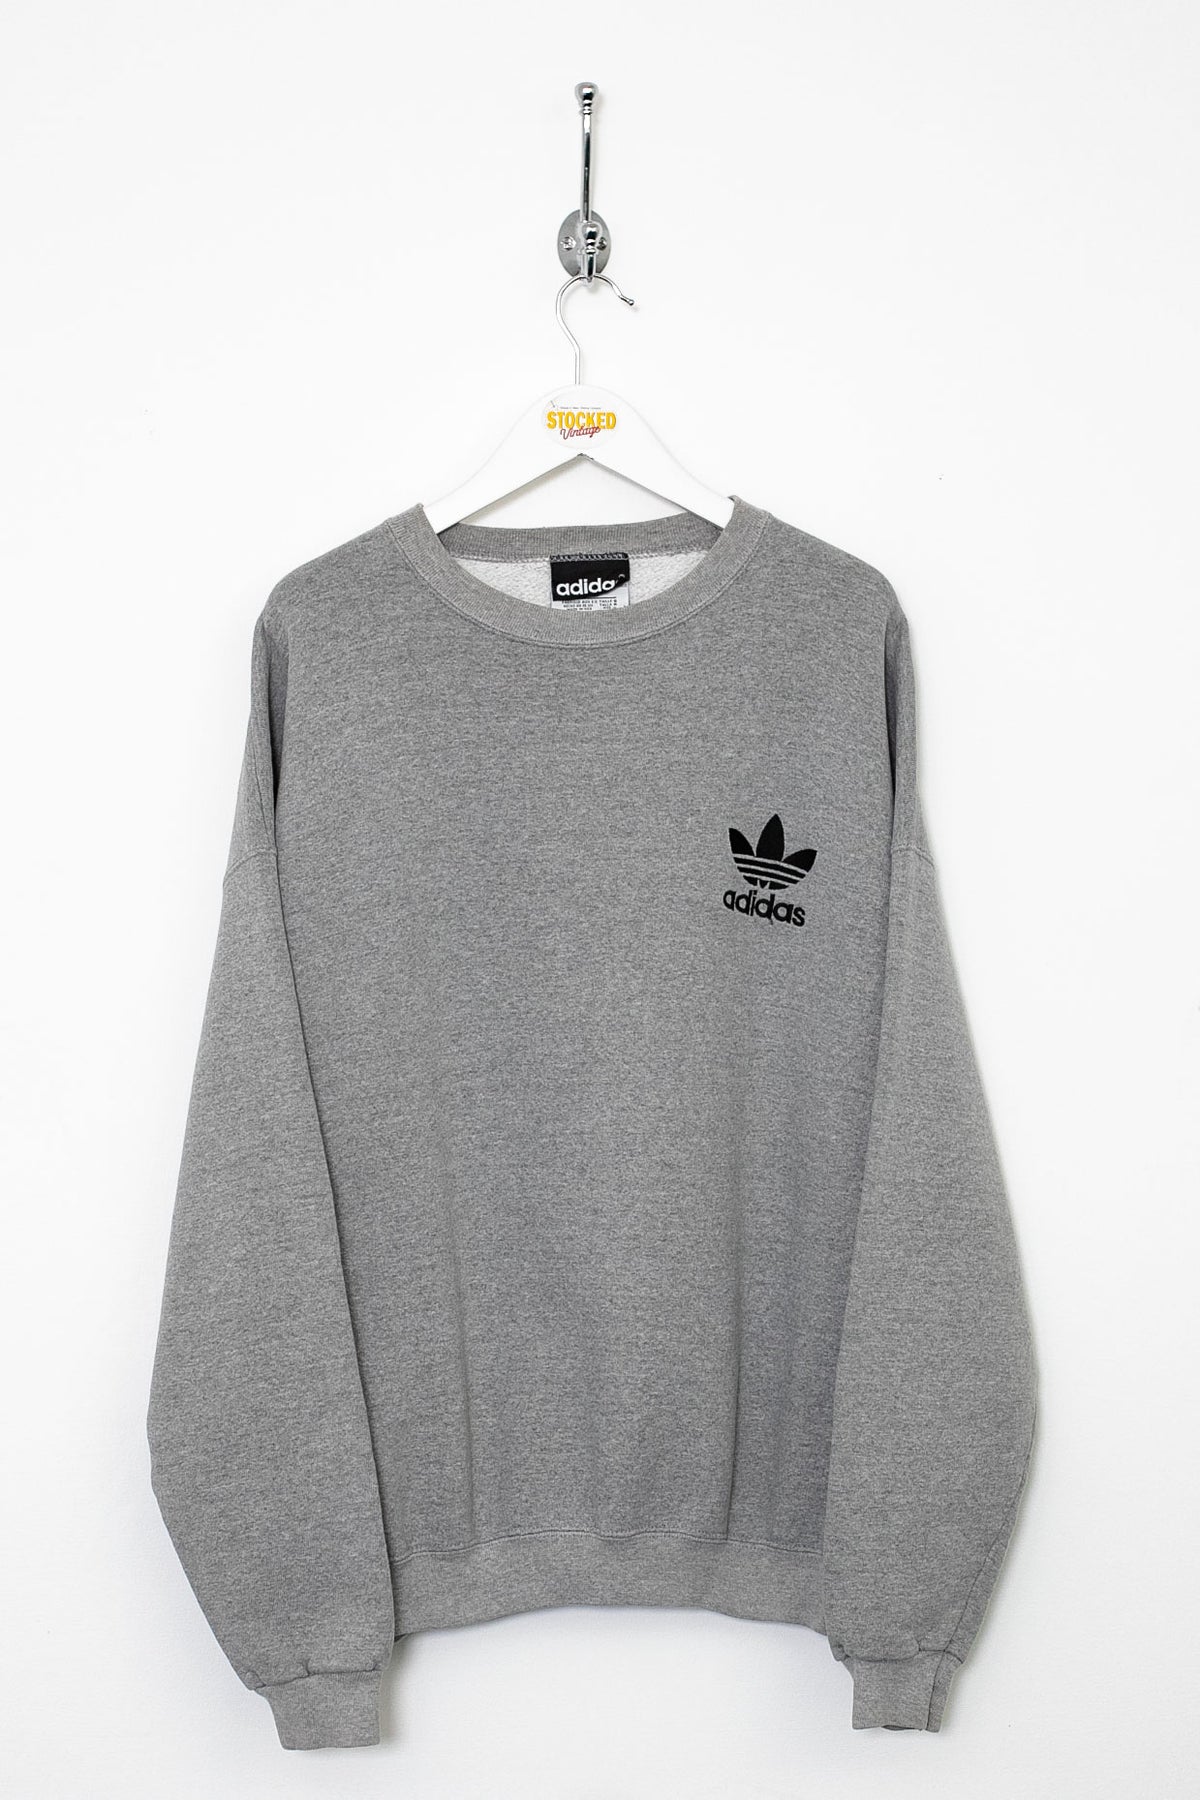 90s Adidas Sweatshirt (L)